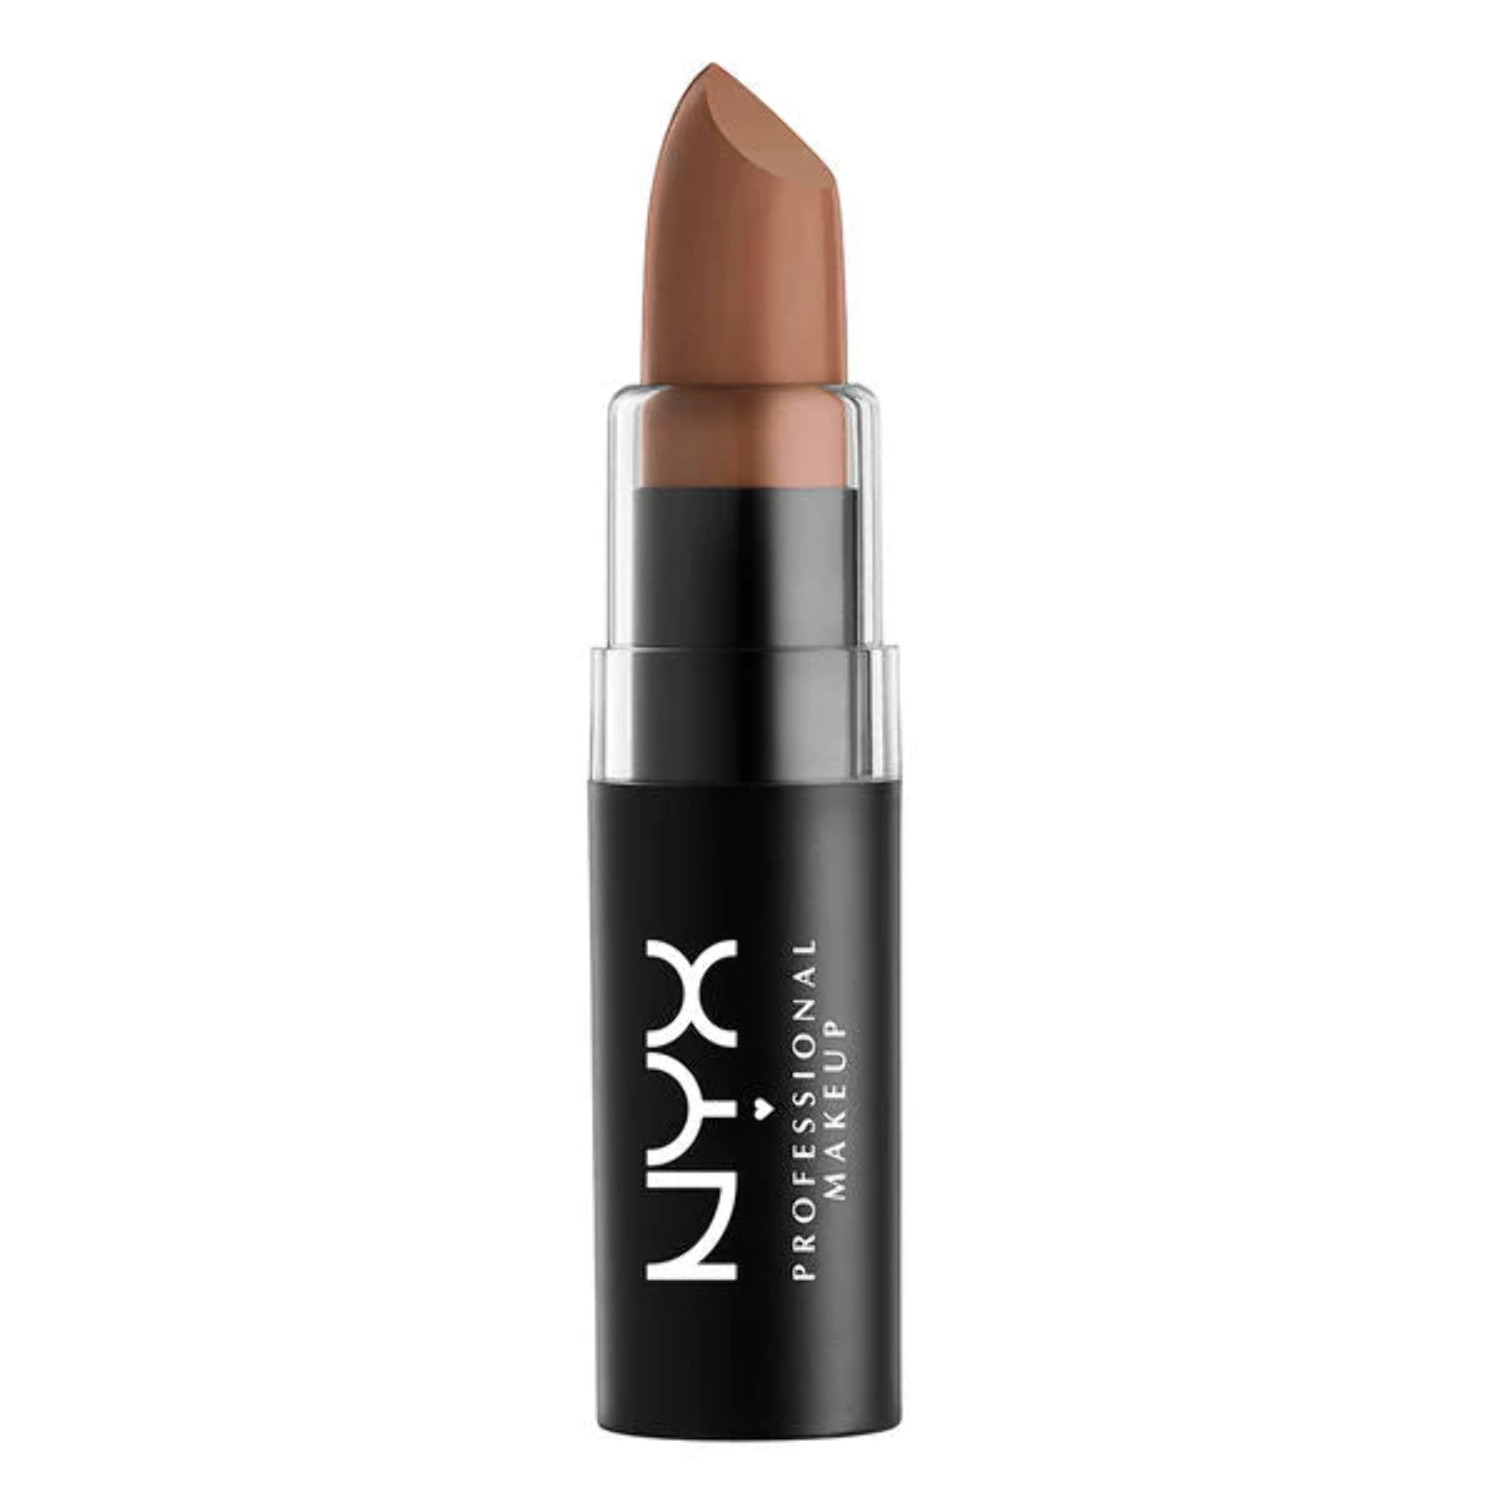 NYX Matte Lipstick - Indie Flick - image 5 of 11